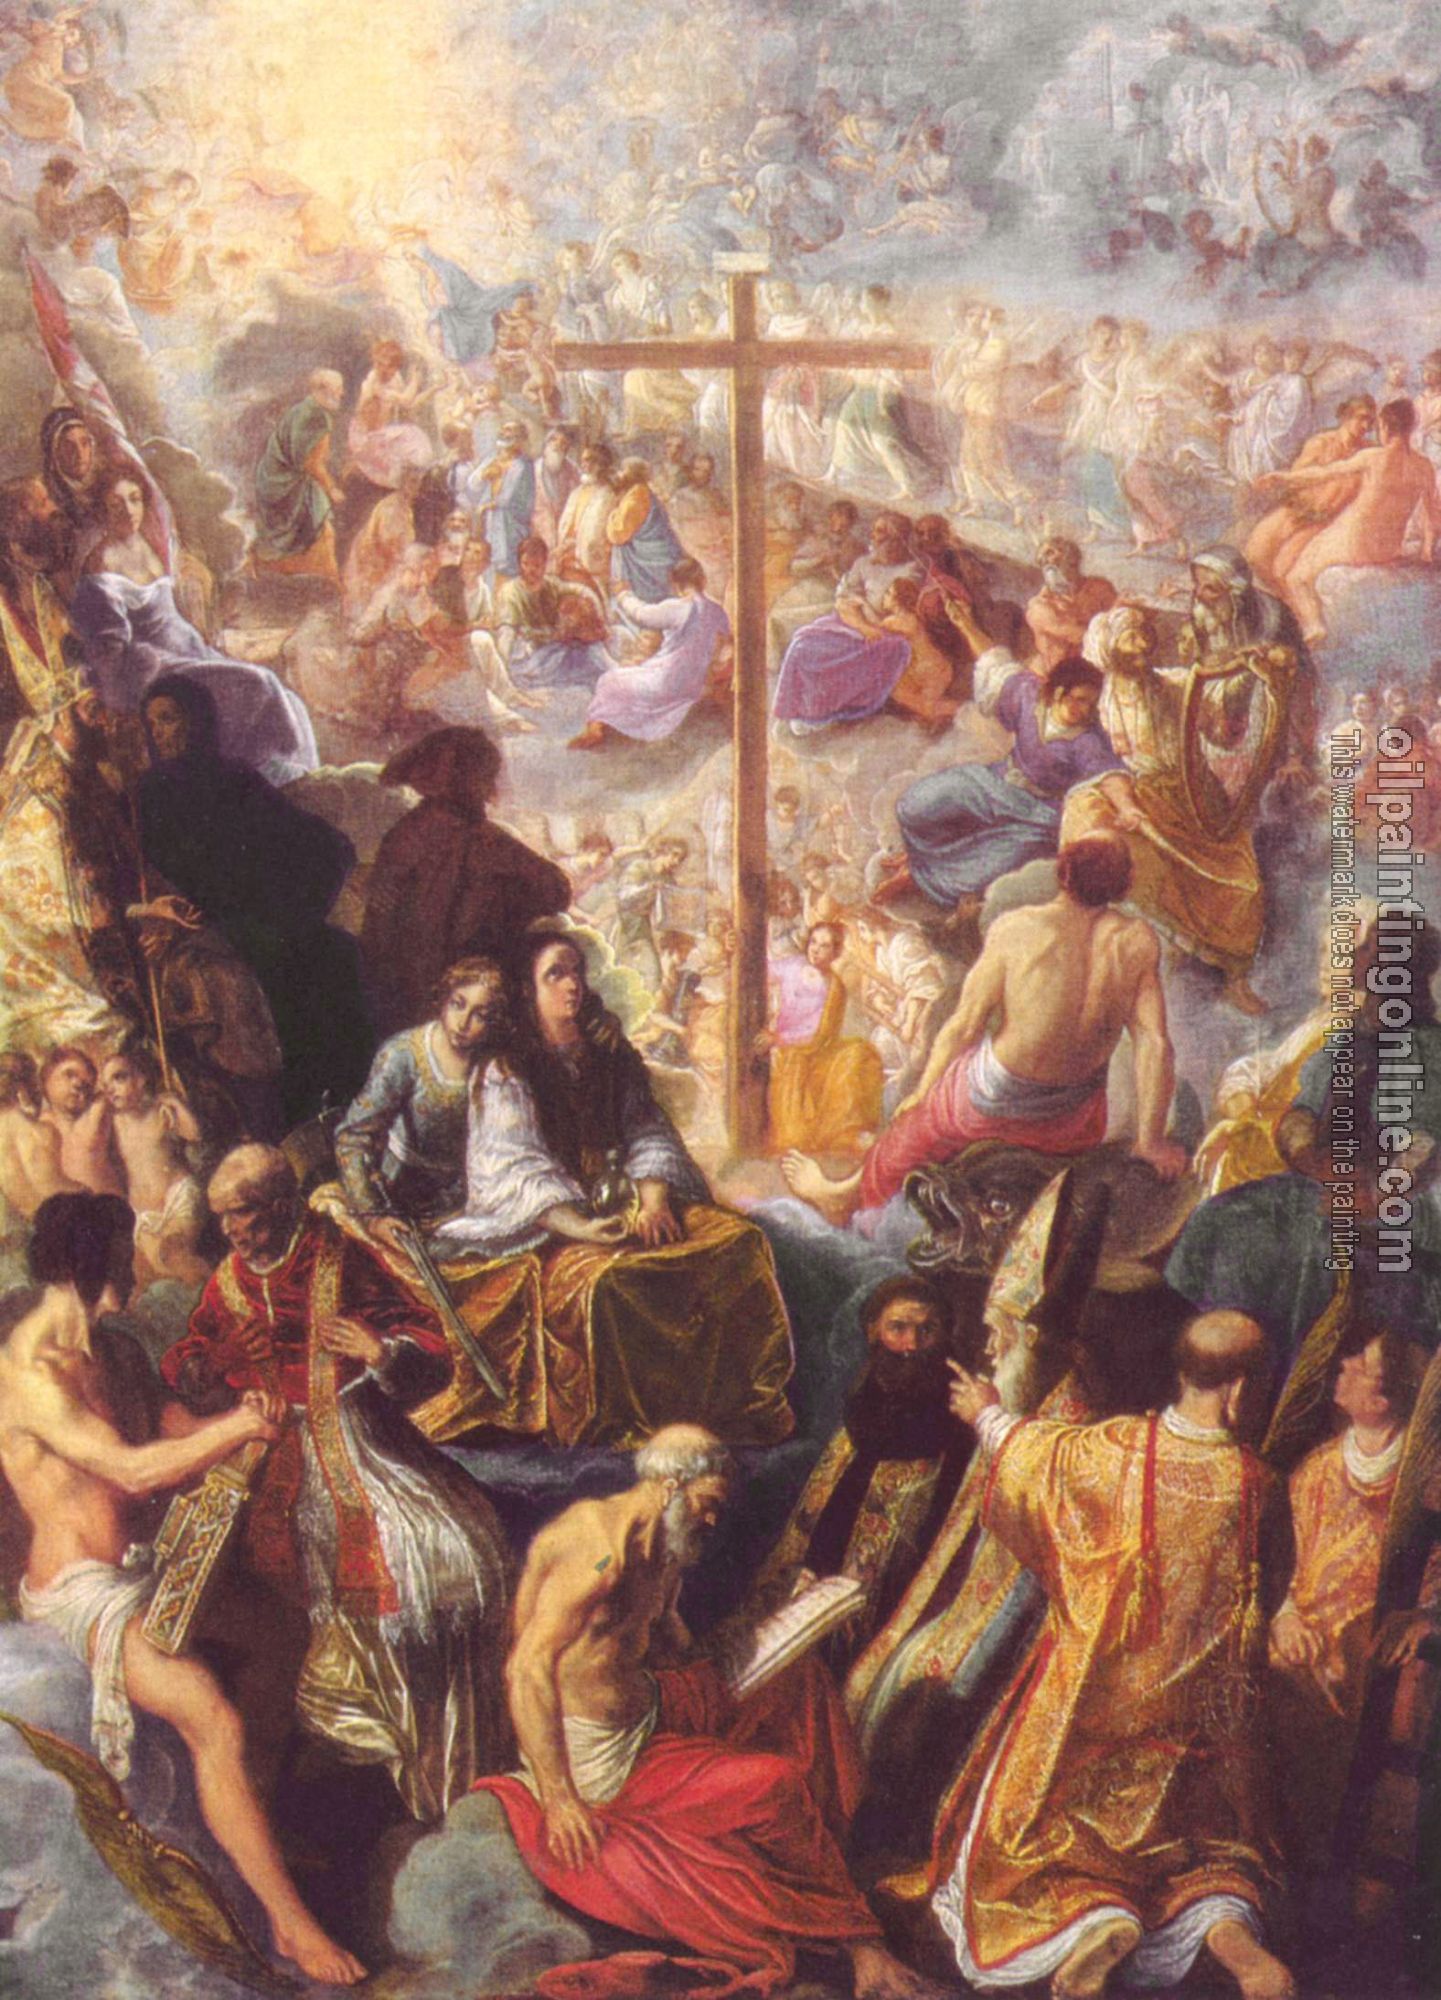 Adam Elsheimer - The Exaltation of the Cross from the Frankfurt Tabernacle